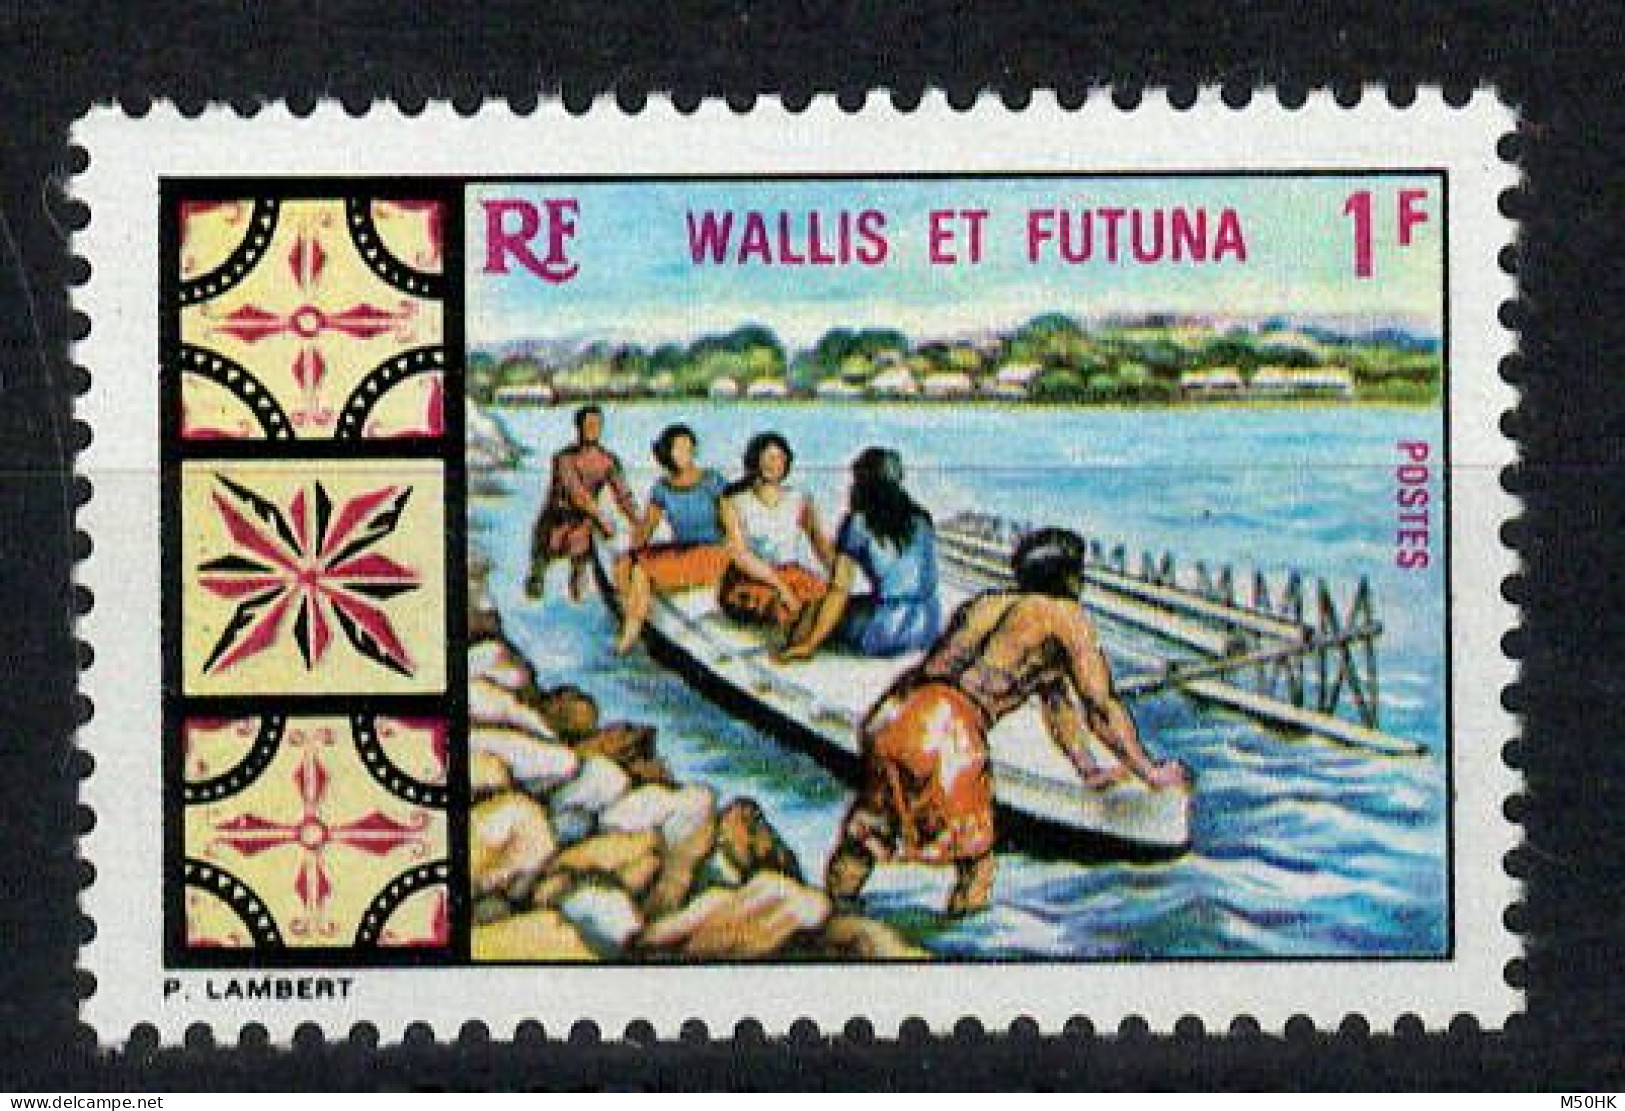 Wallis Et Futuna - YV 174 N** MNH Luxe , Petit Bateau - Ungebraucht